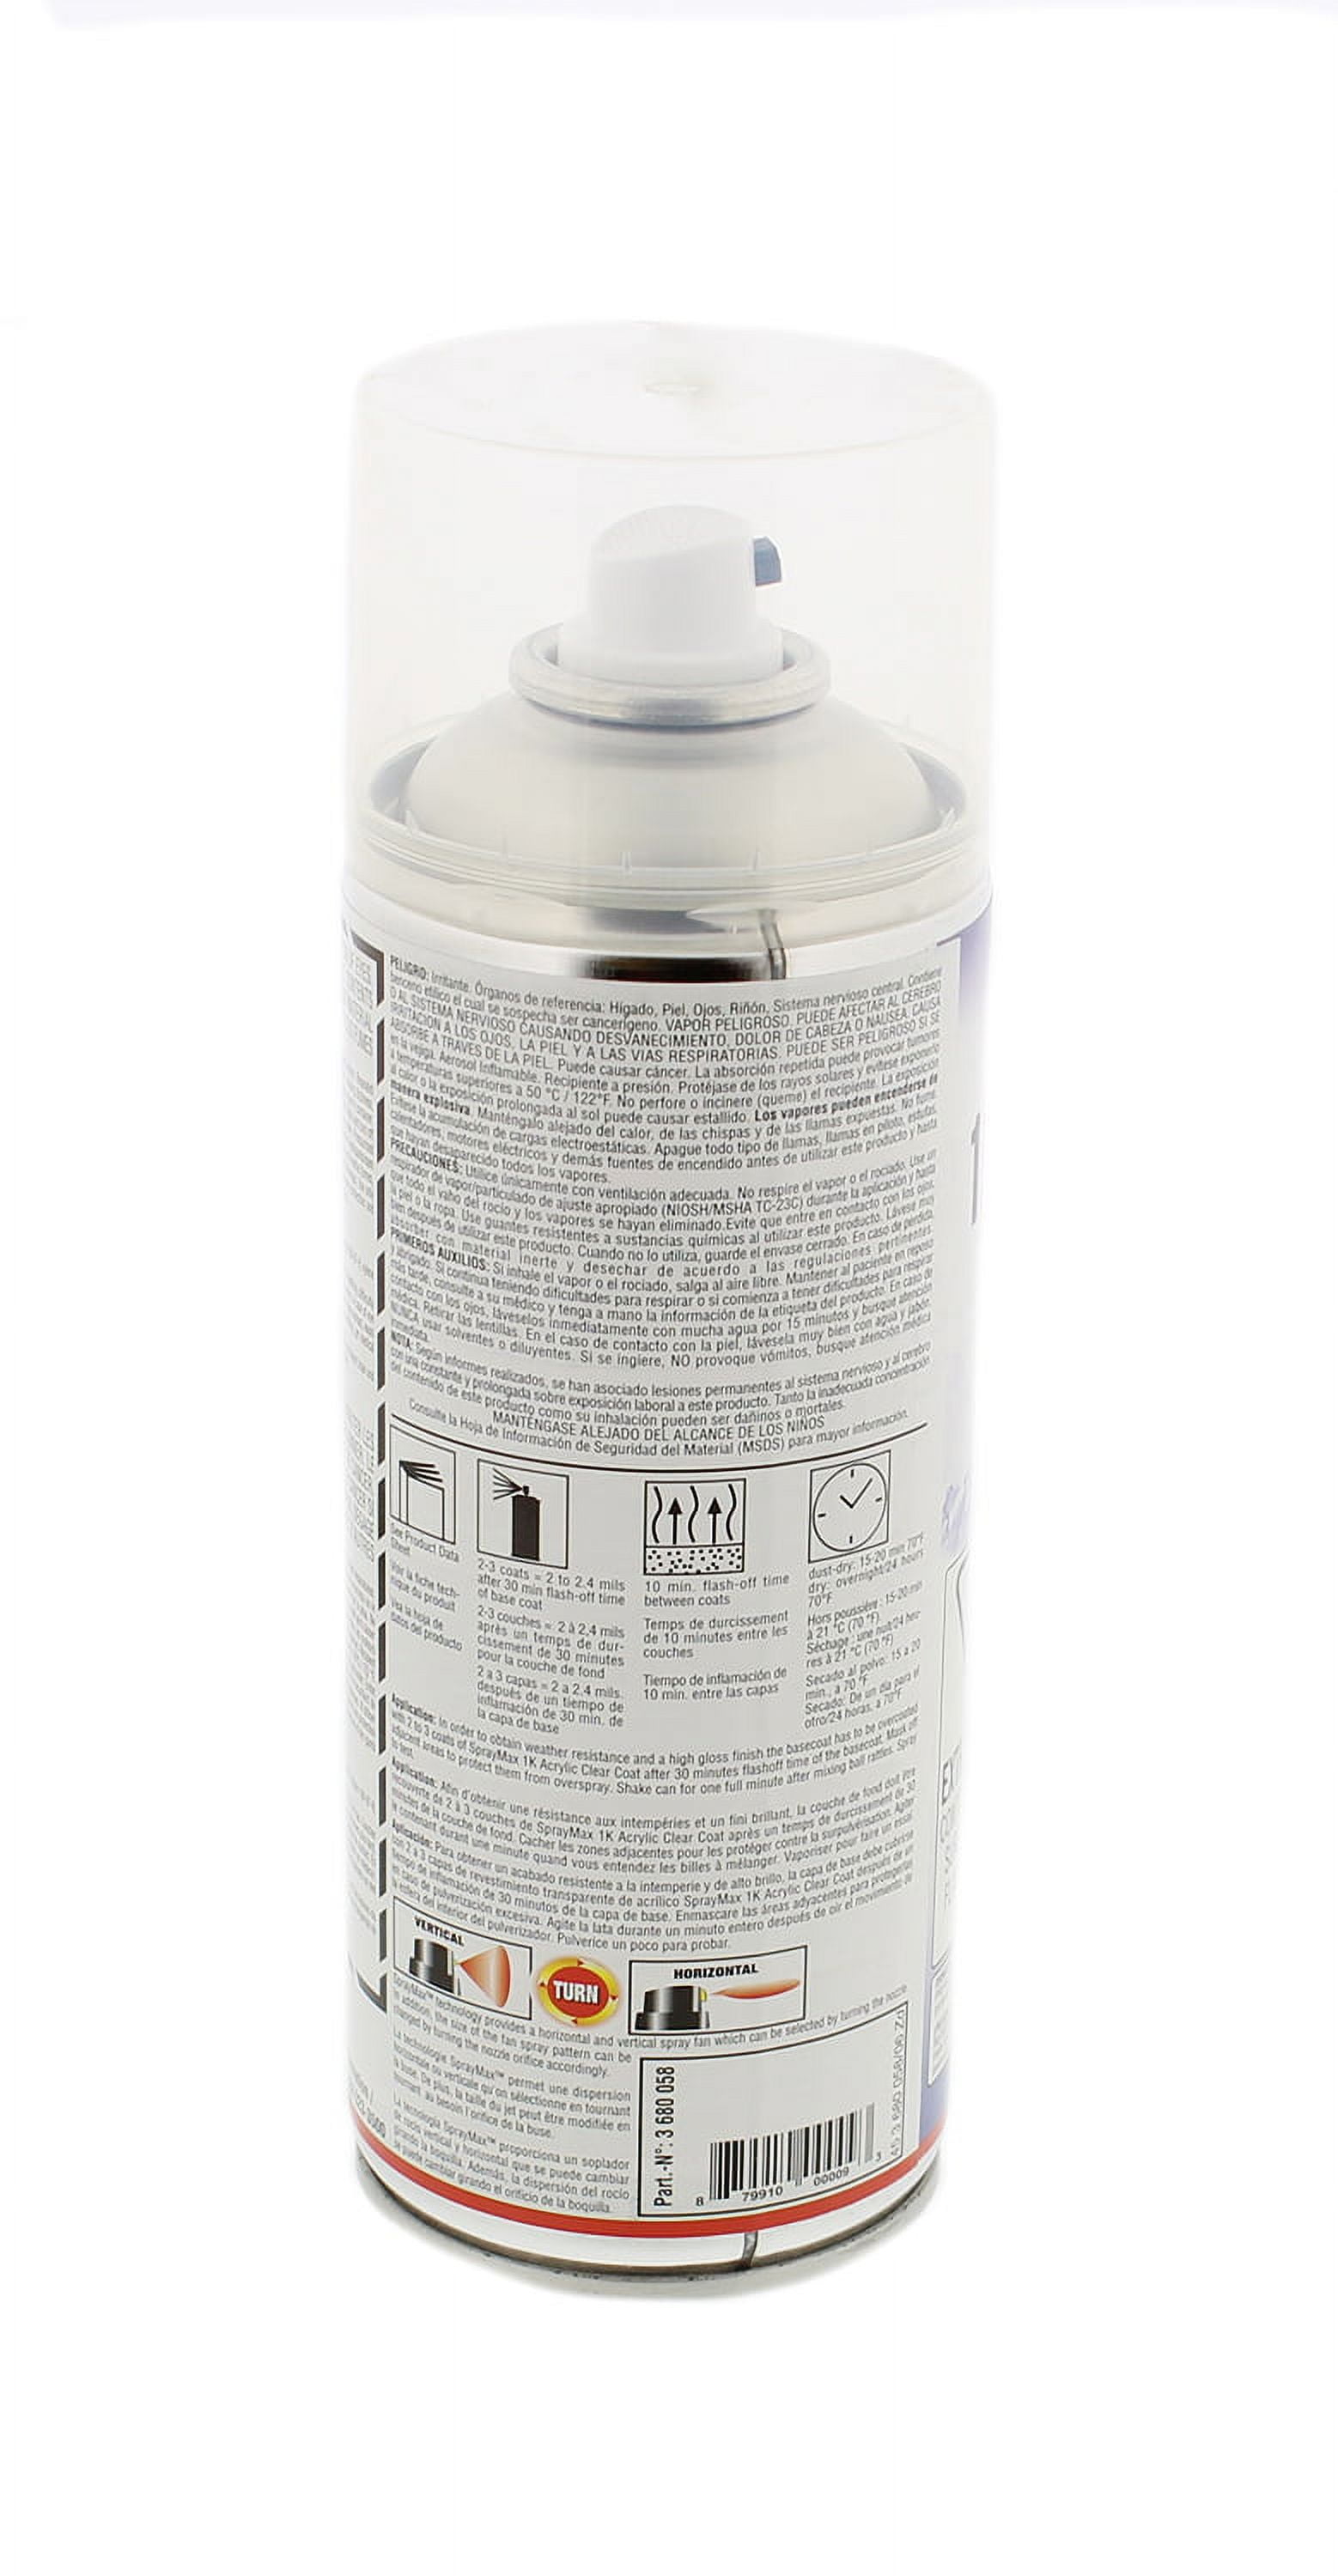 Spray Max USC 2K High Gloss Clearcoat Aerosol (2 Pack)